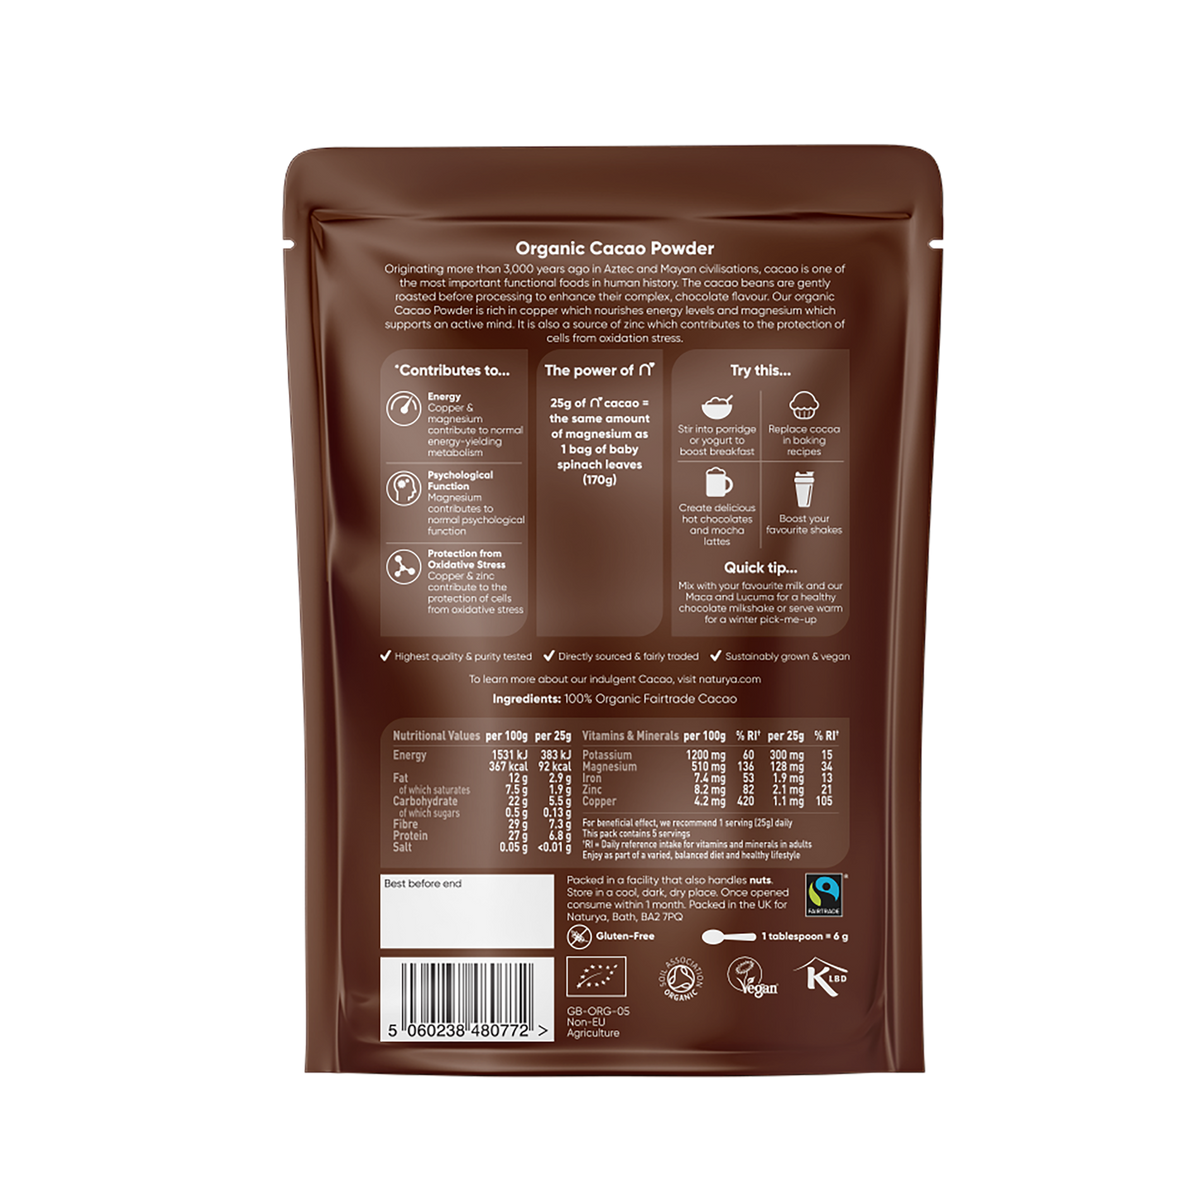 Cacao Powder Organic (125G)